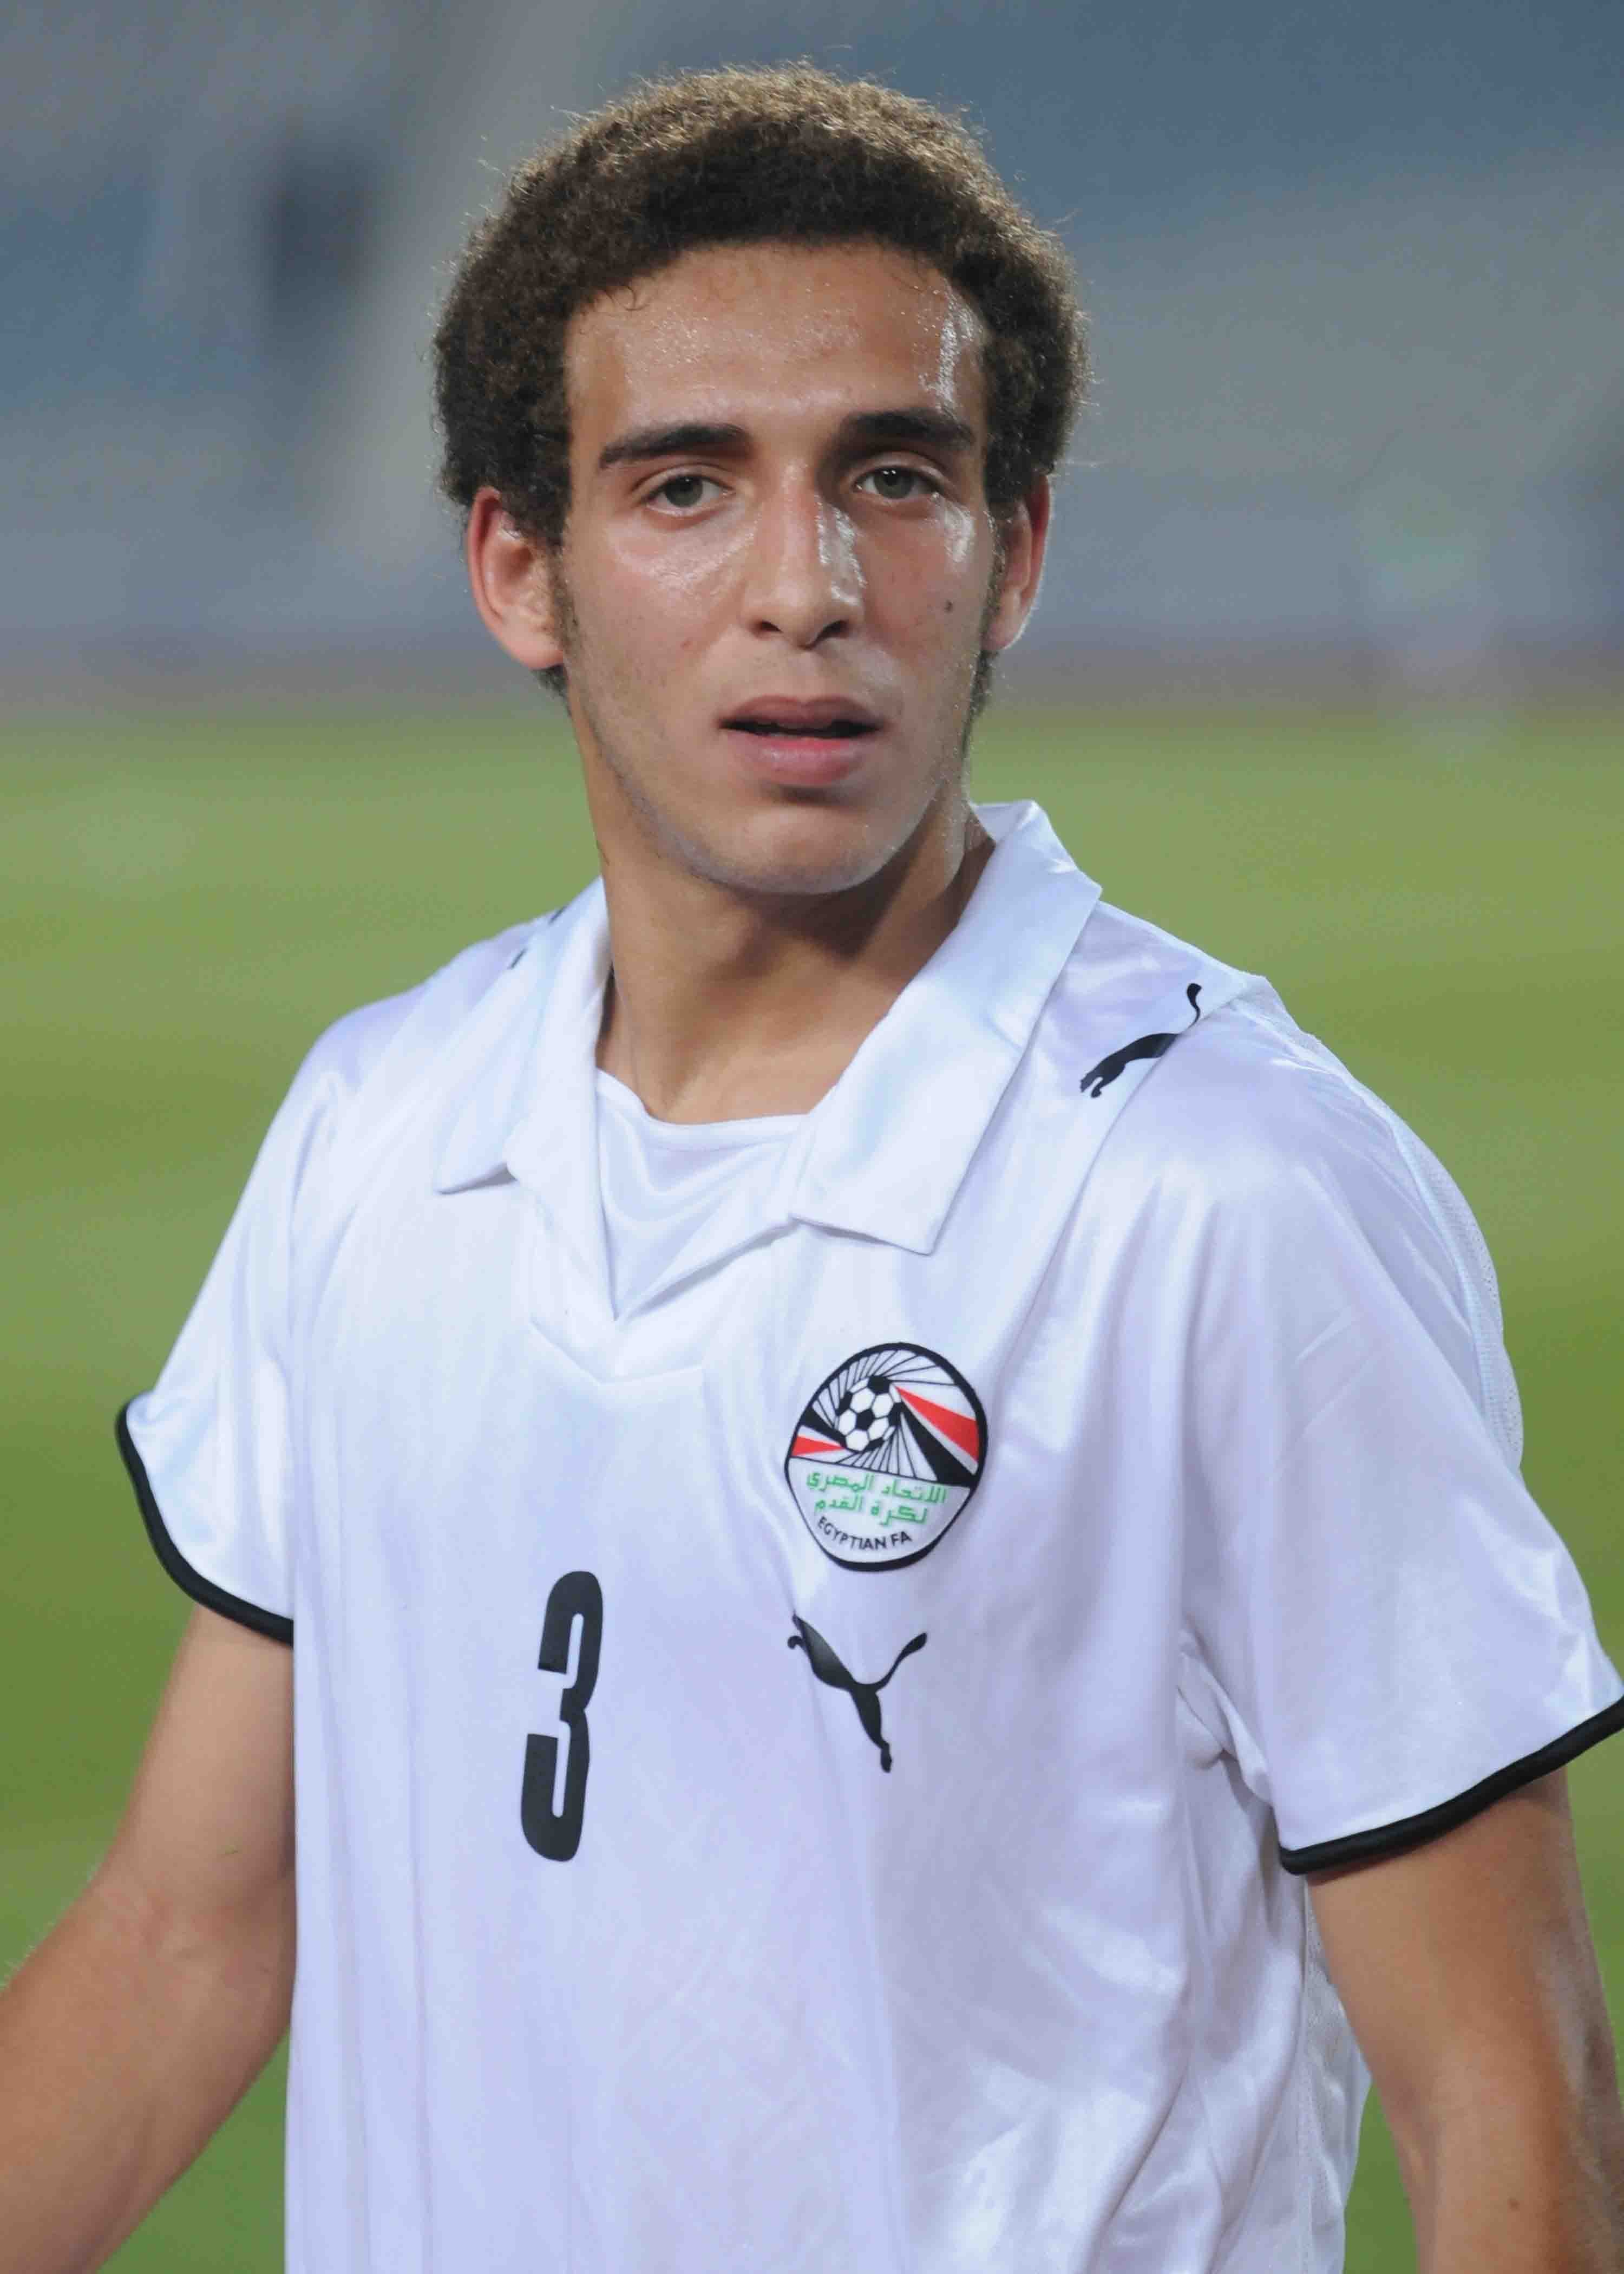 هشام محمد